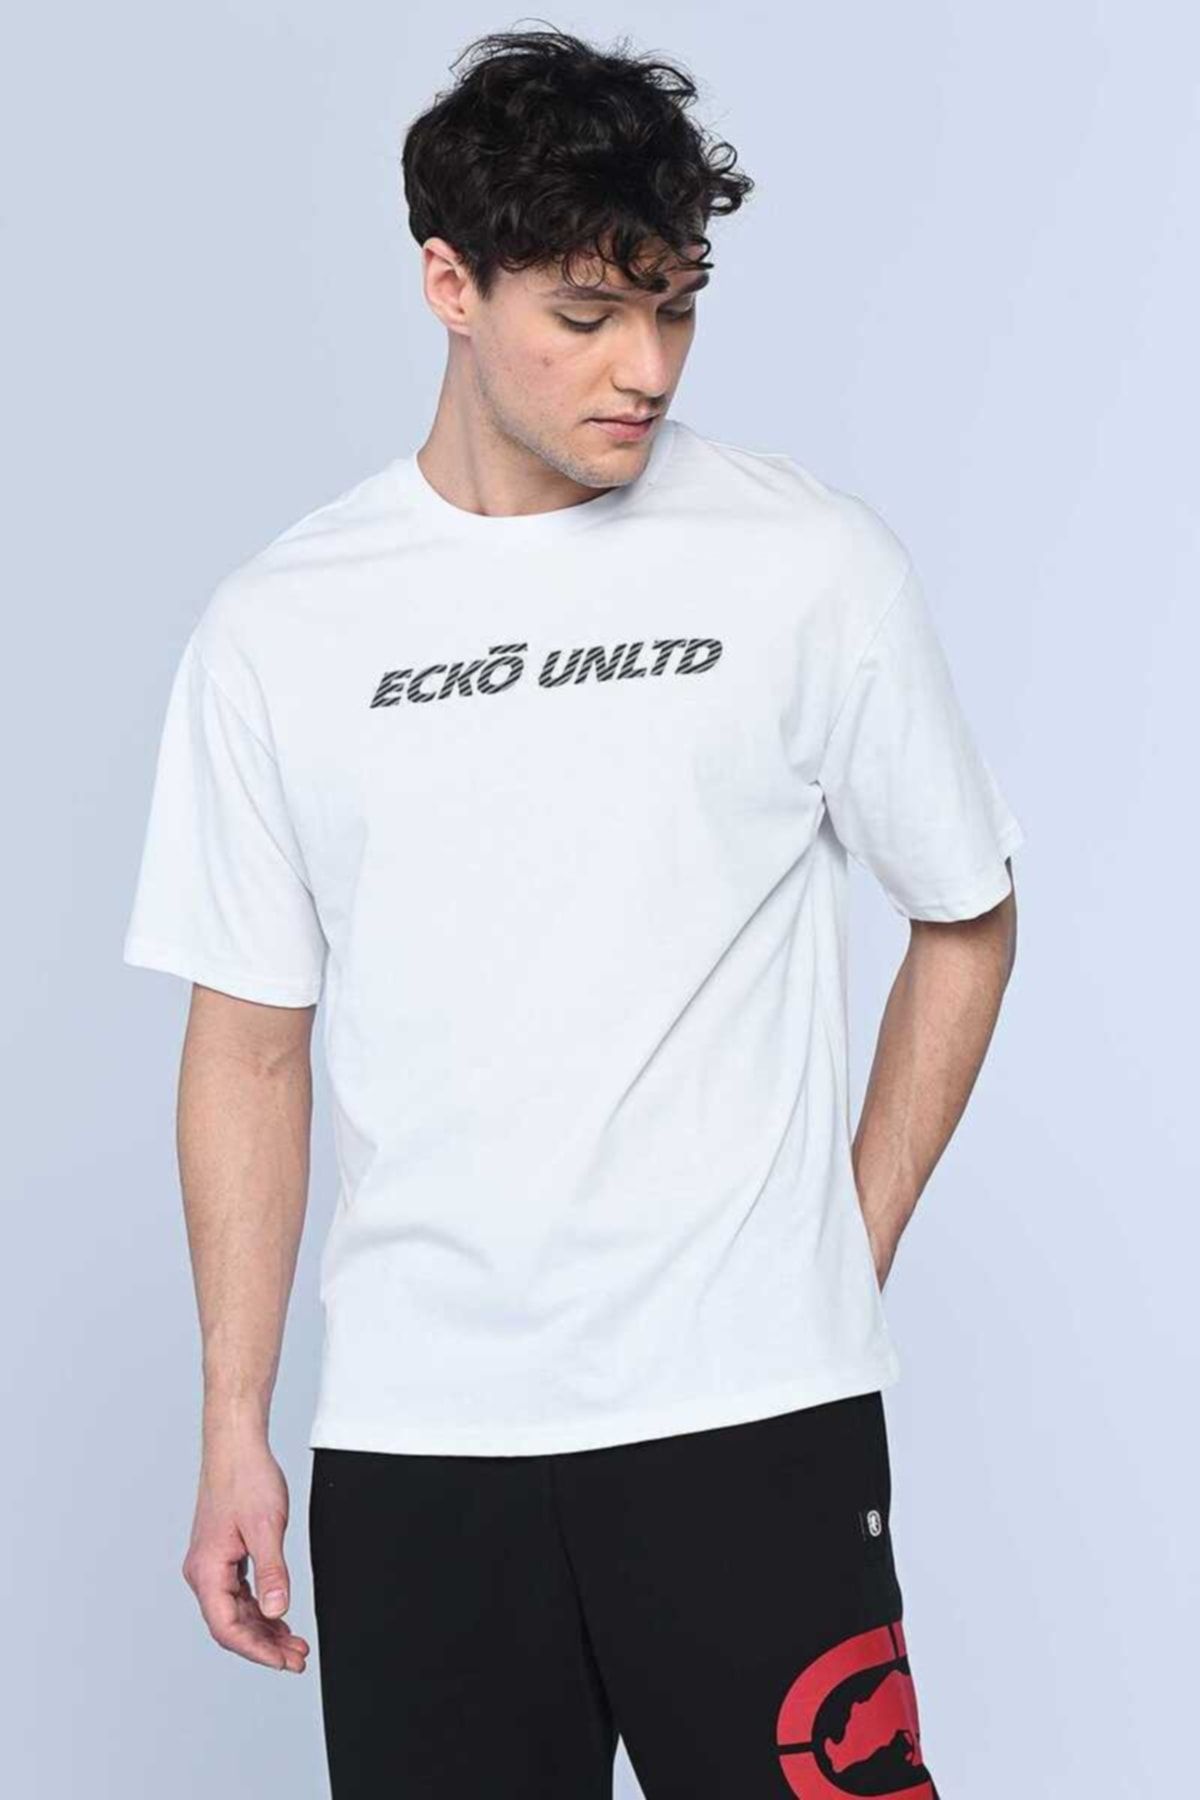 Ecko Unltd Ecko Unlimited Erkek Beyaz Bisiklet Yaka T-shirt